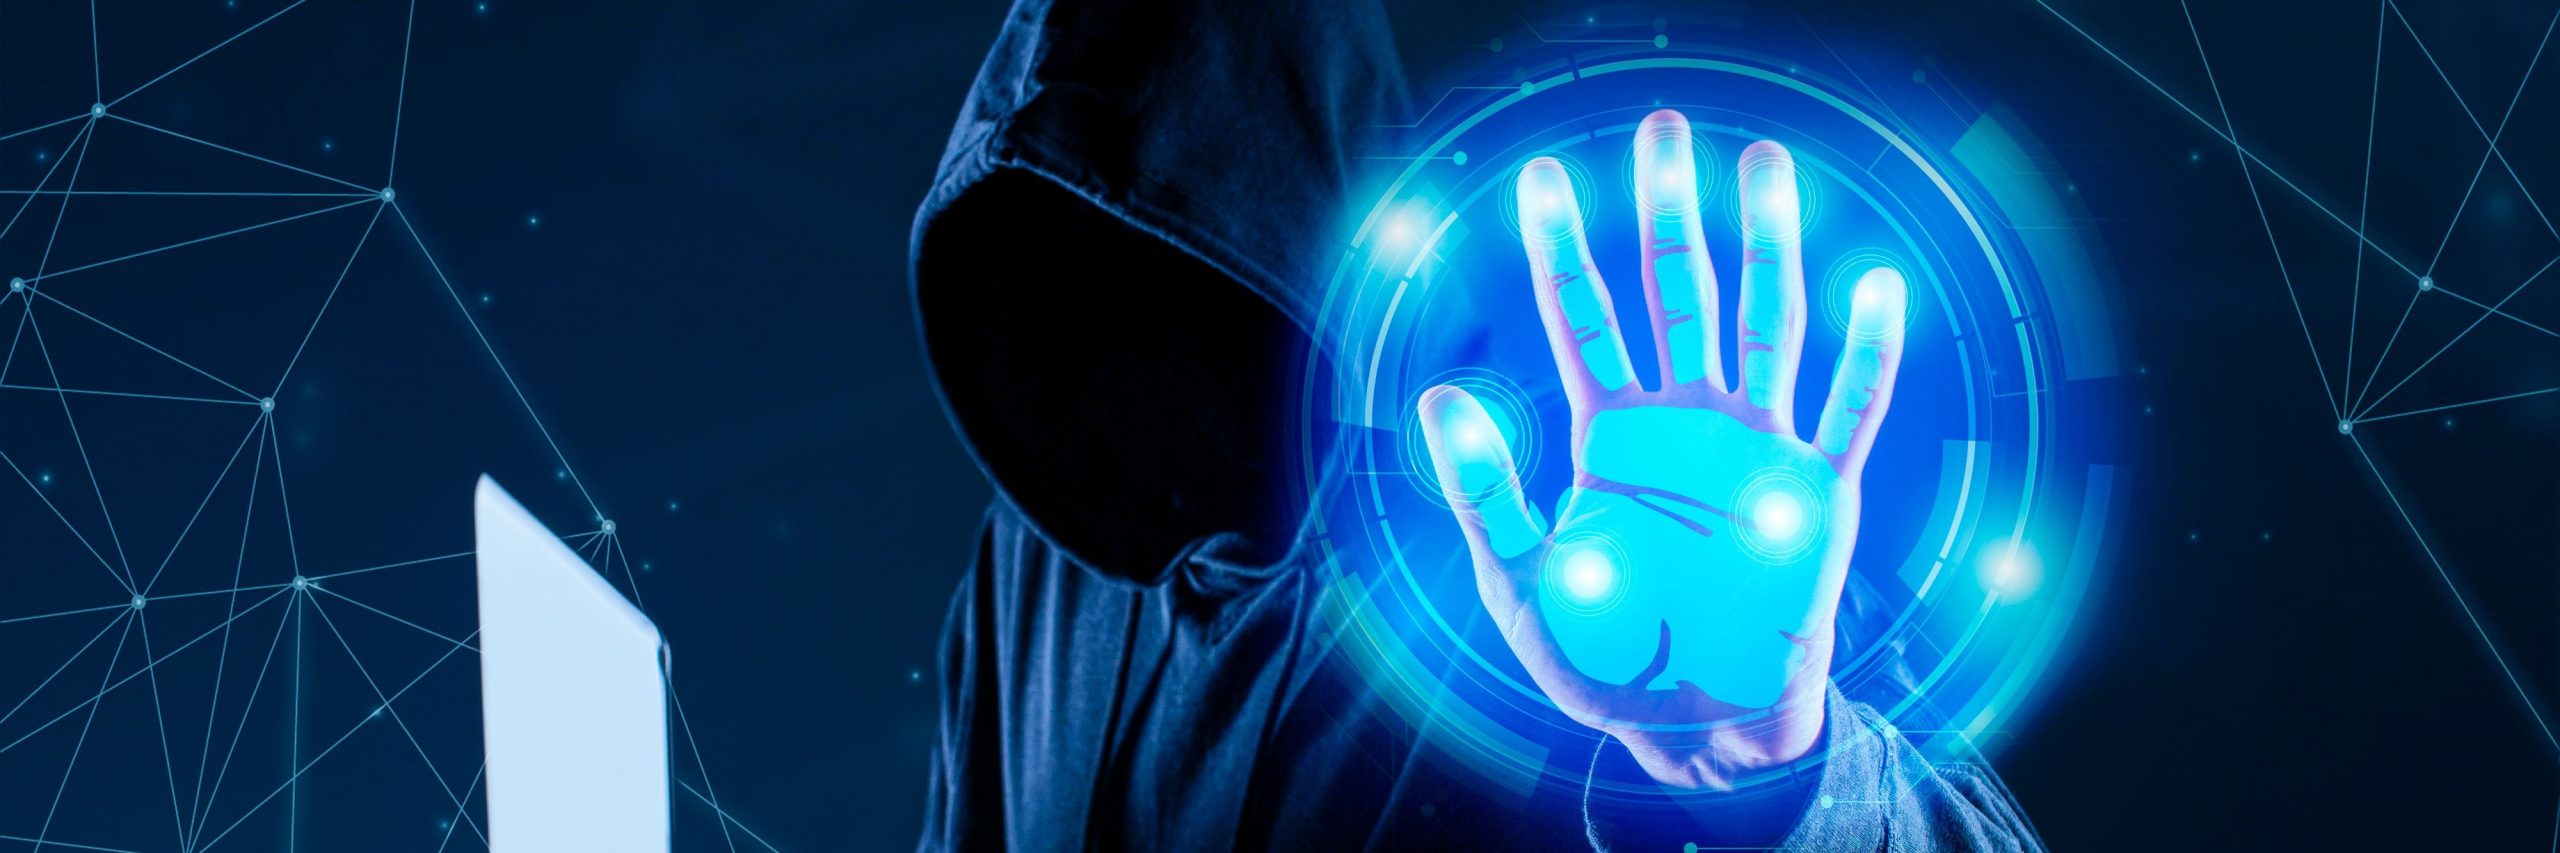 No radar dos criminosos: Por que diversas empresas continuam vivenciando ataques cibernéticos?